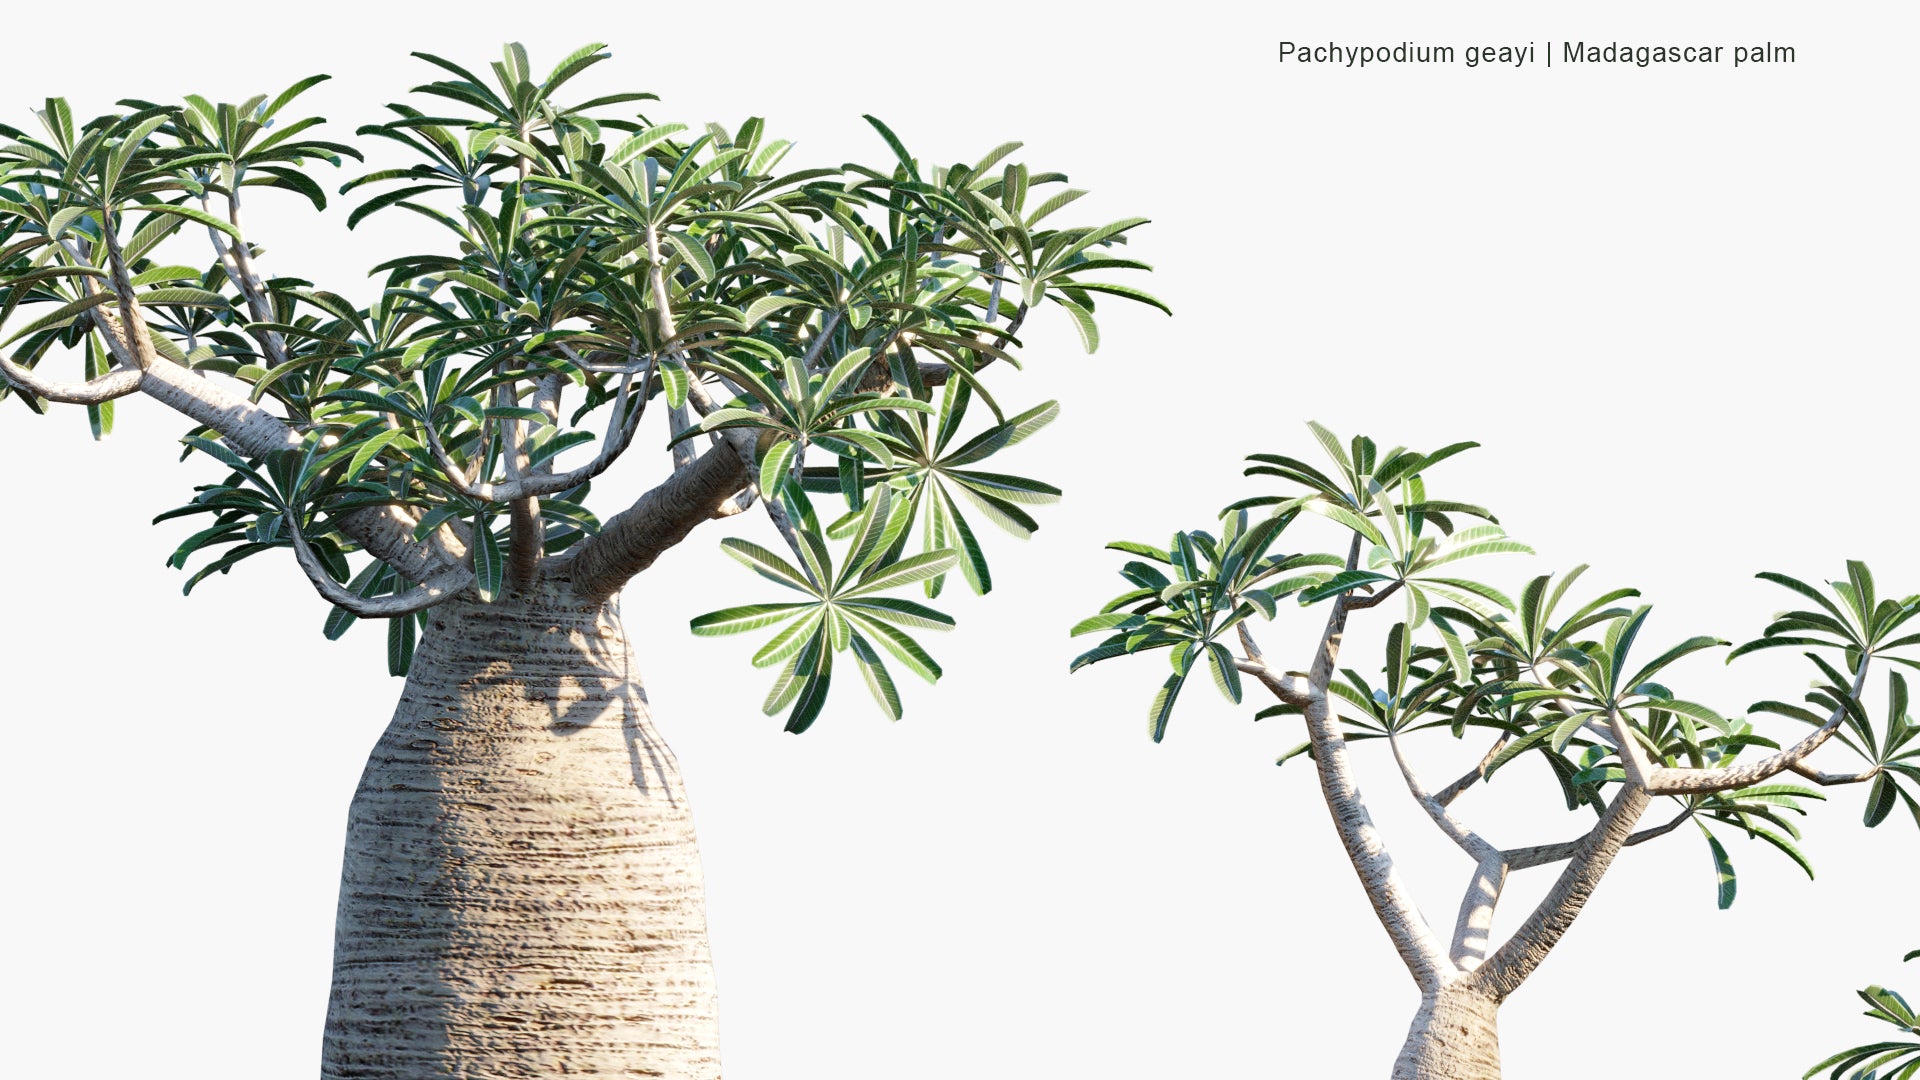 Low Poly Pachypodium Geayi - Madagascar Palm (3D Model)